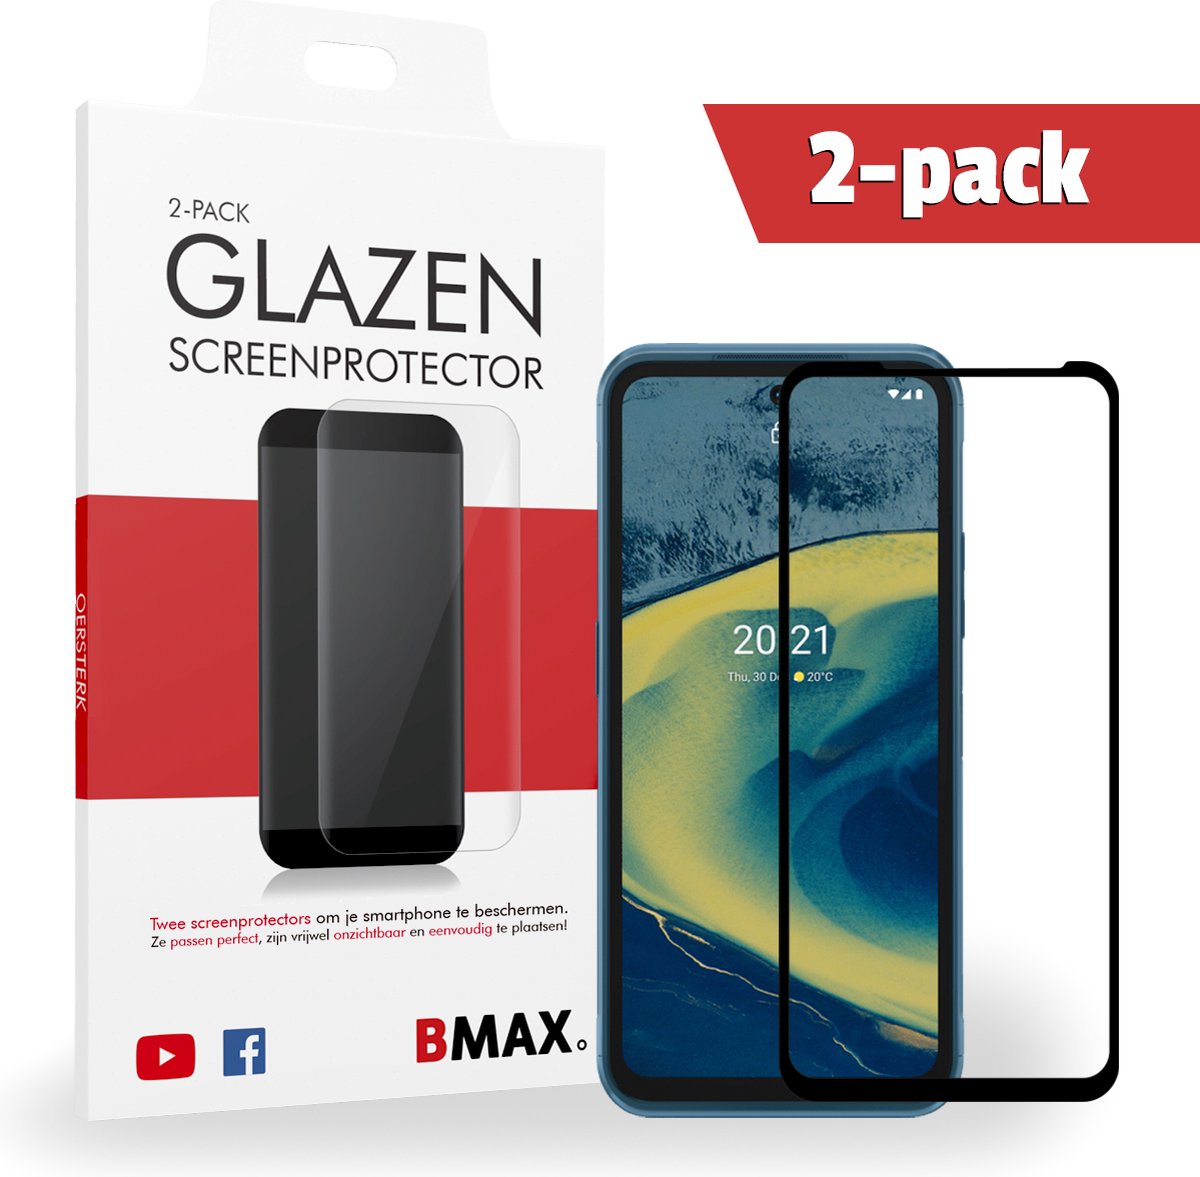 2-pack Bmax Nokia Xr20 Screenprotector - Glass - Full Cover 2.5d - Black